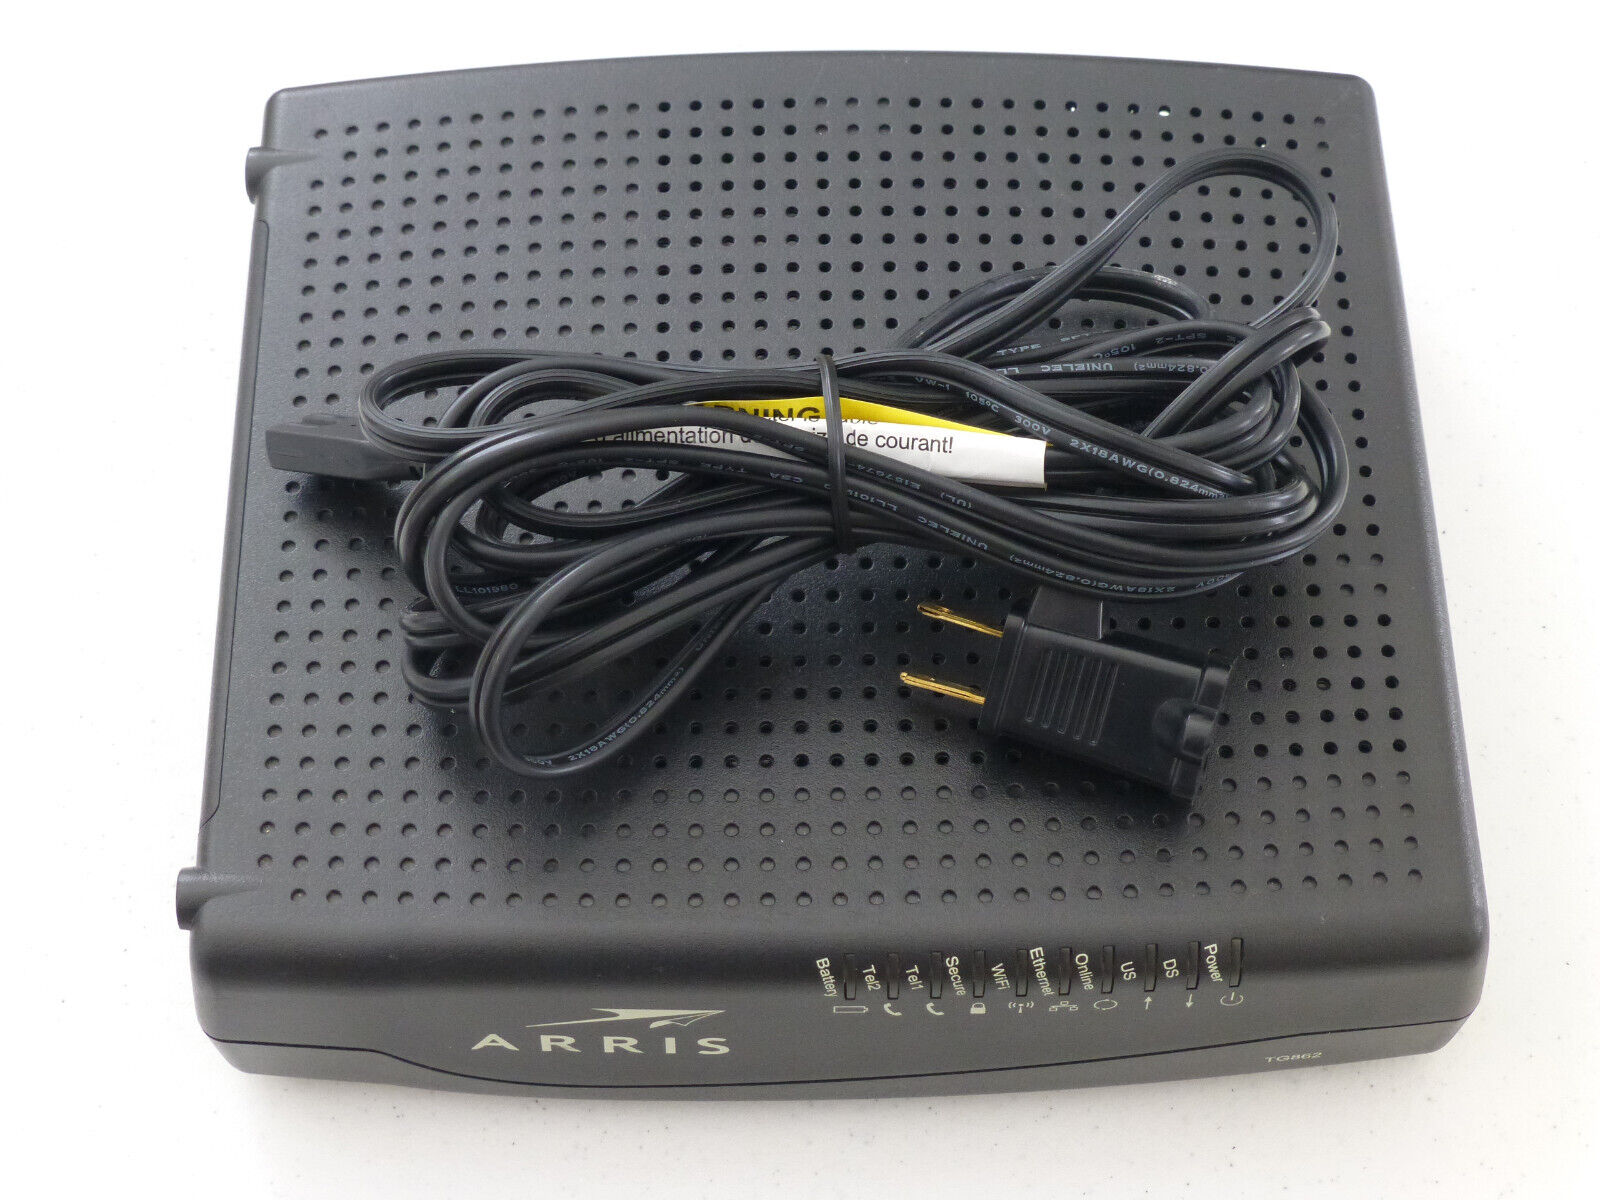 Arris TG862G Wireless Cable Gateway Router Modem